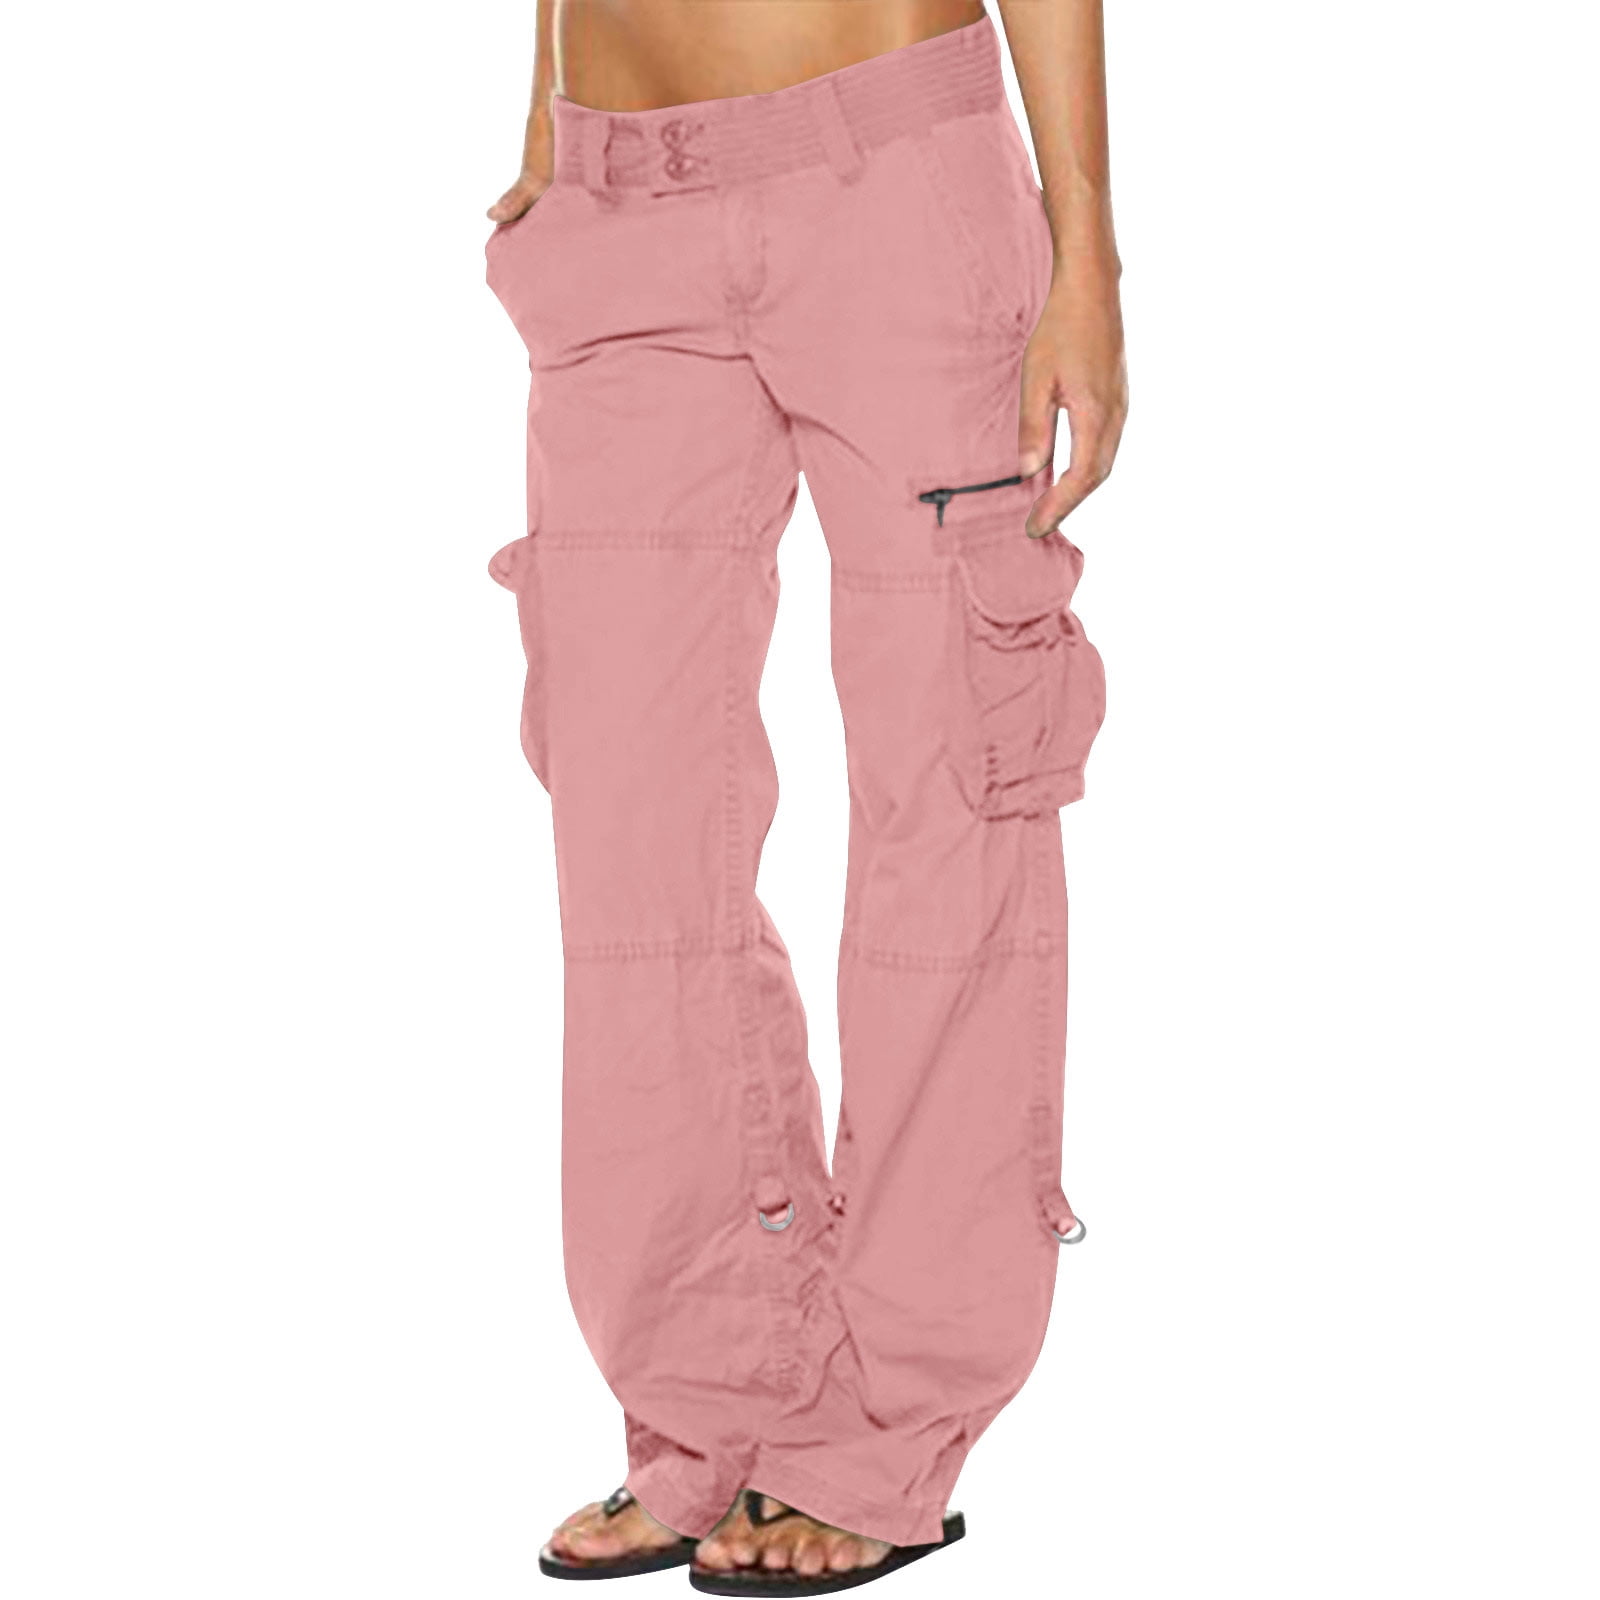 HAPIMO Savings Hippie Punk Streetwear Pants for Women Solid Color